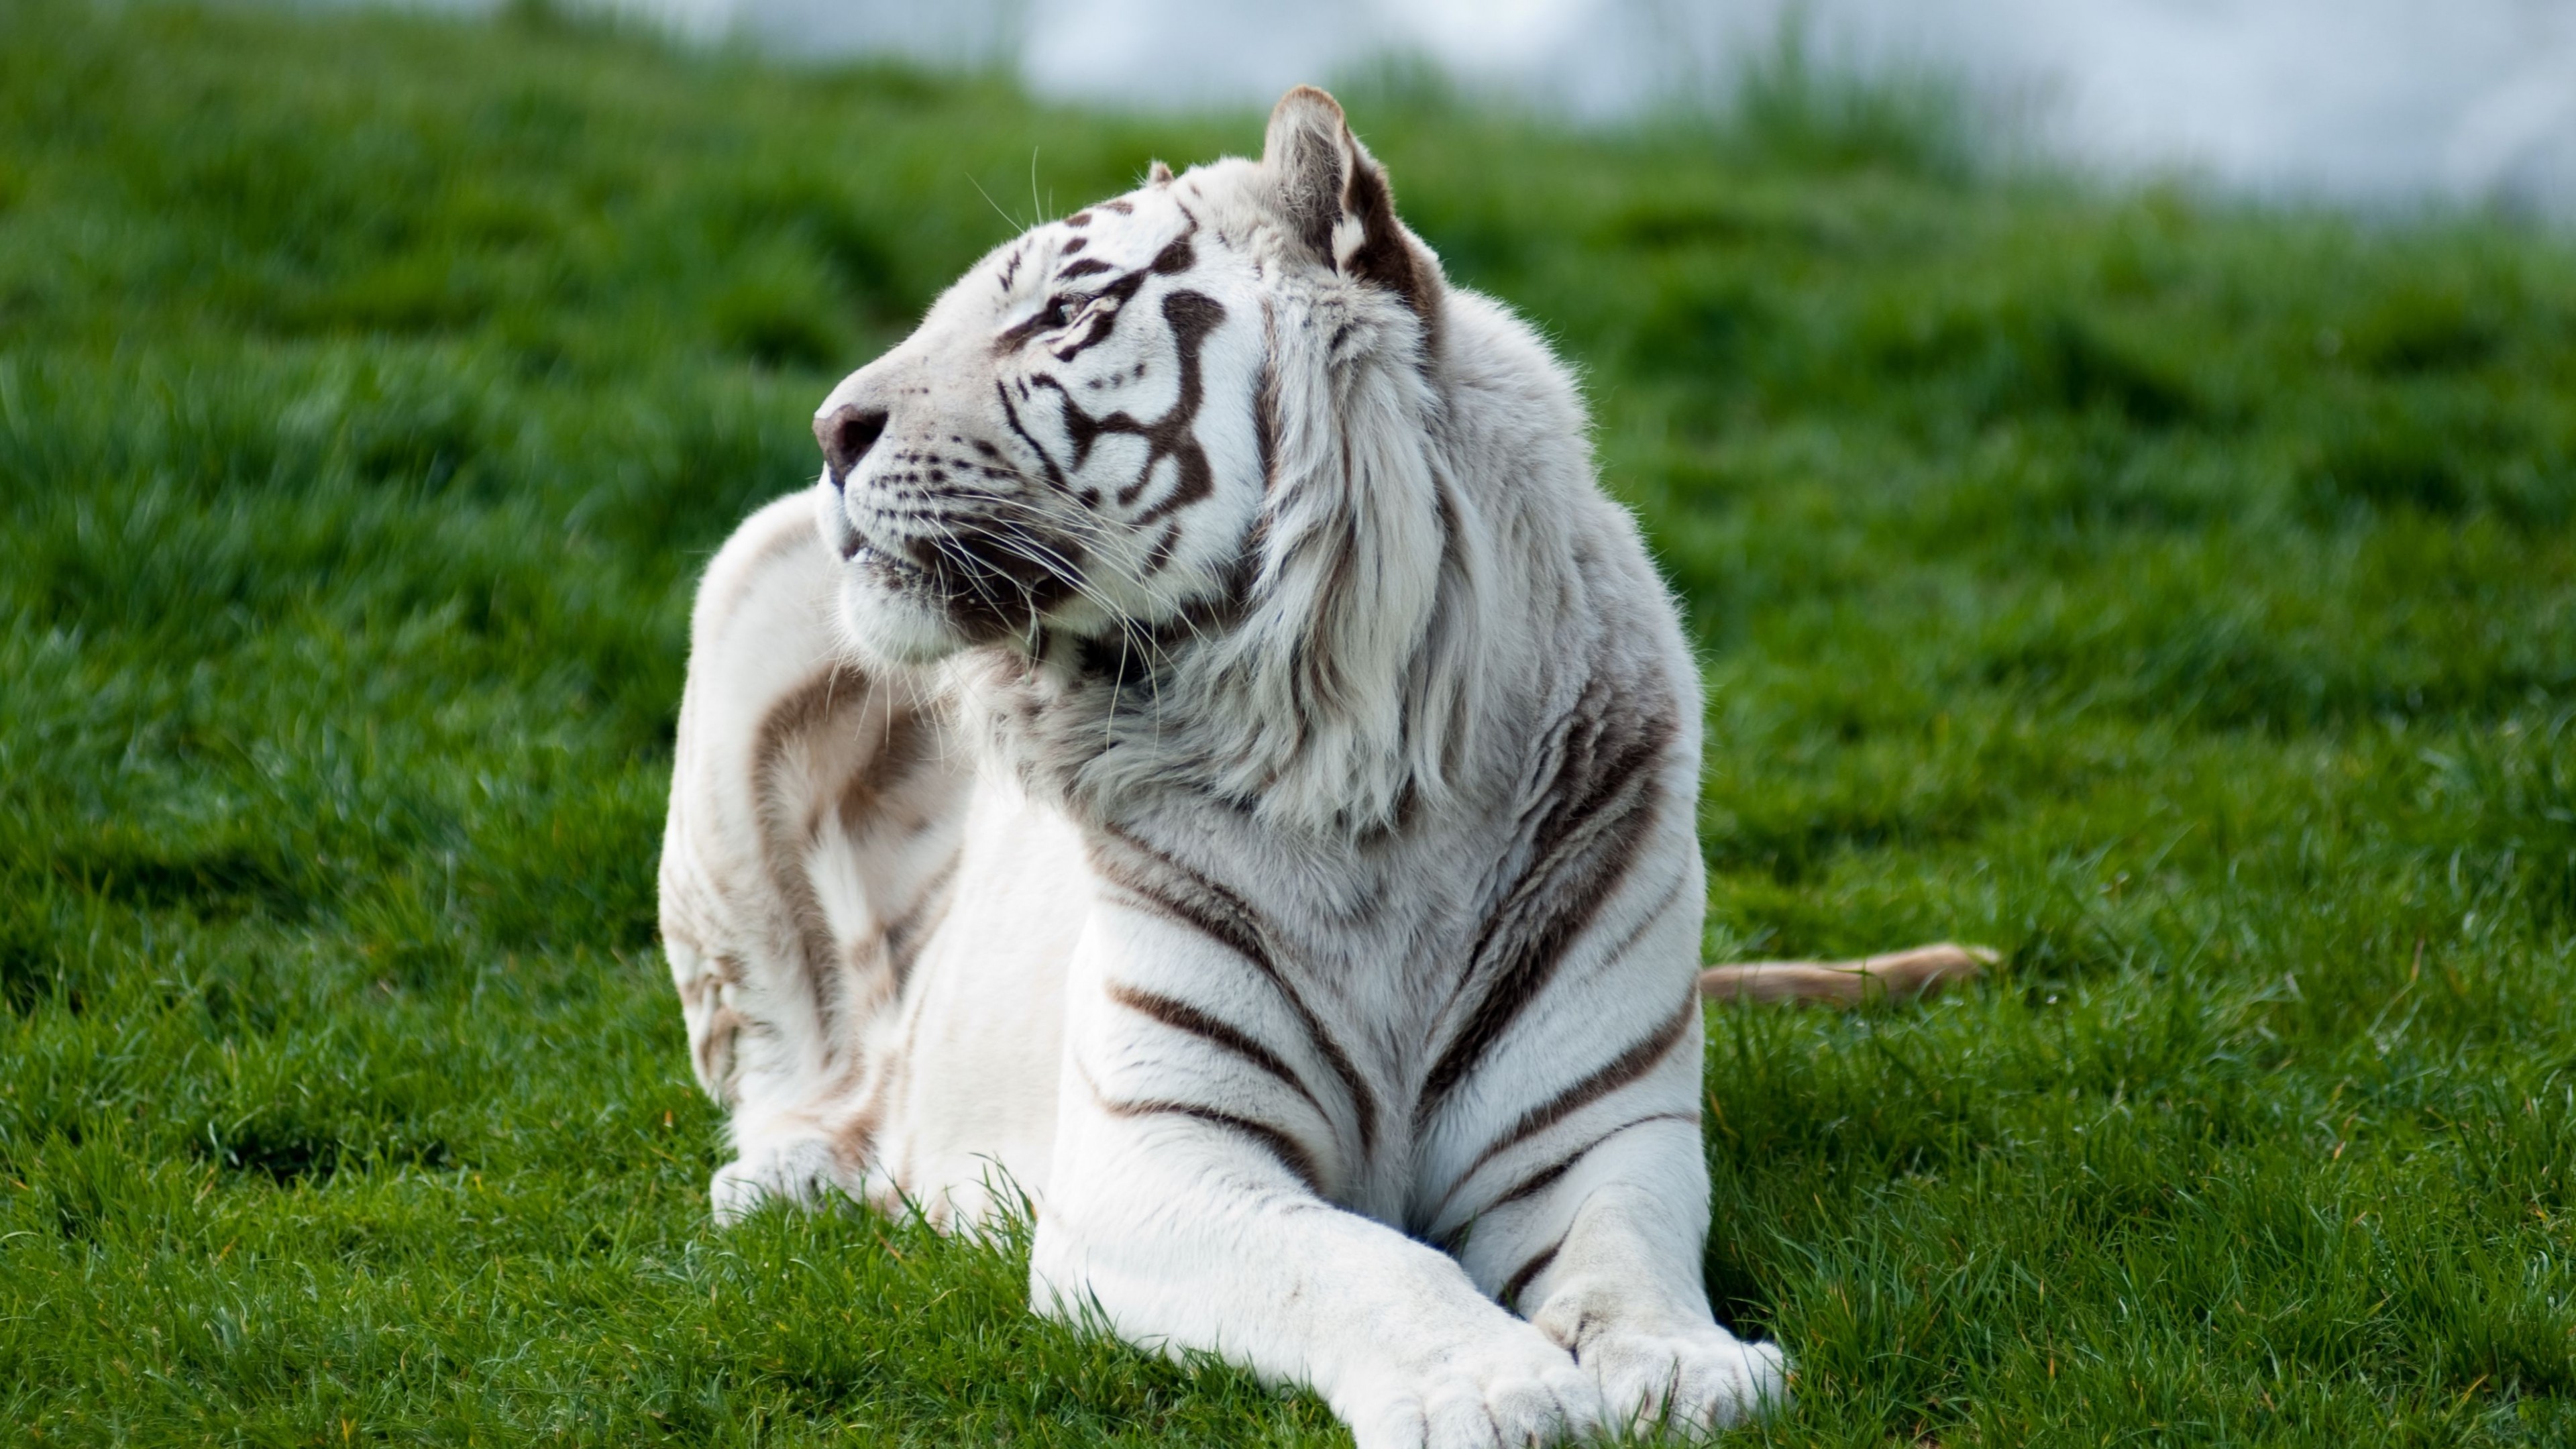 A white tiger lies on the green grass